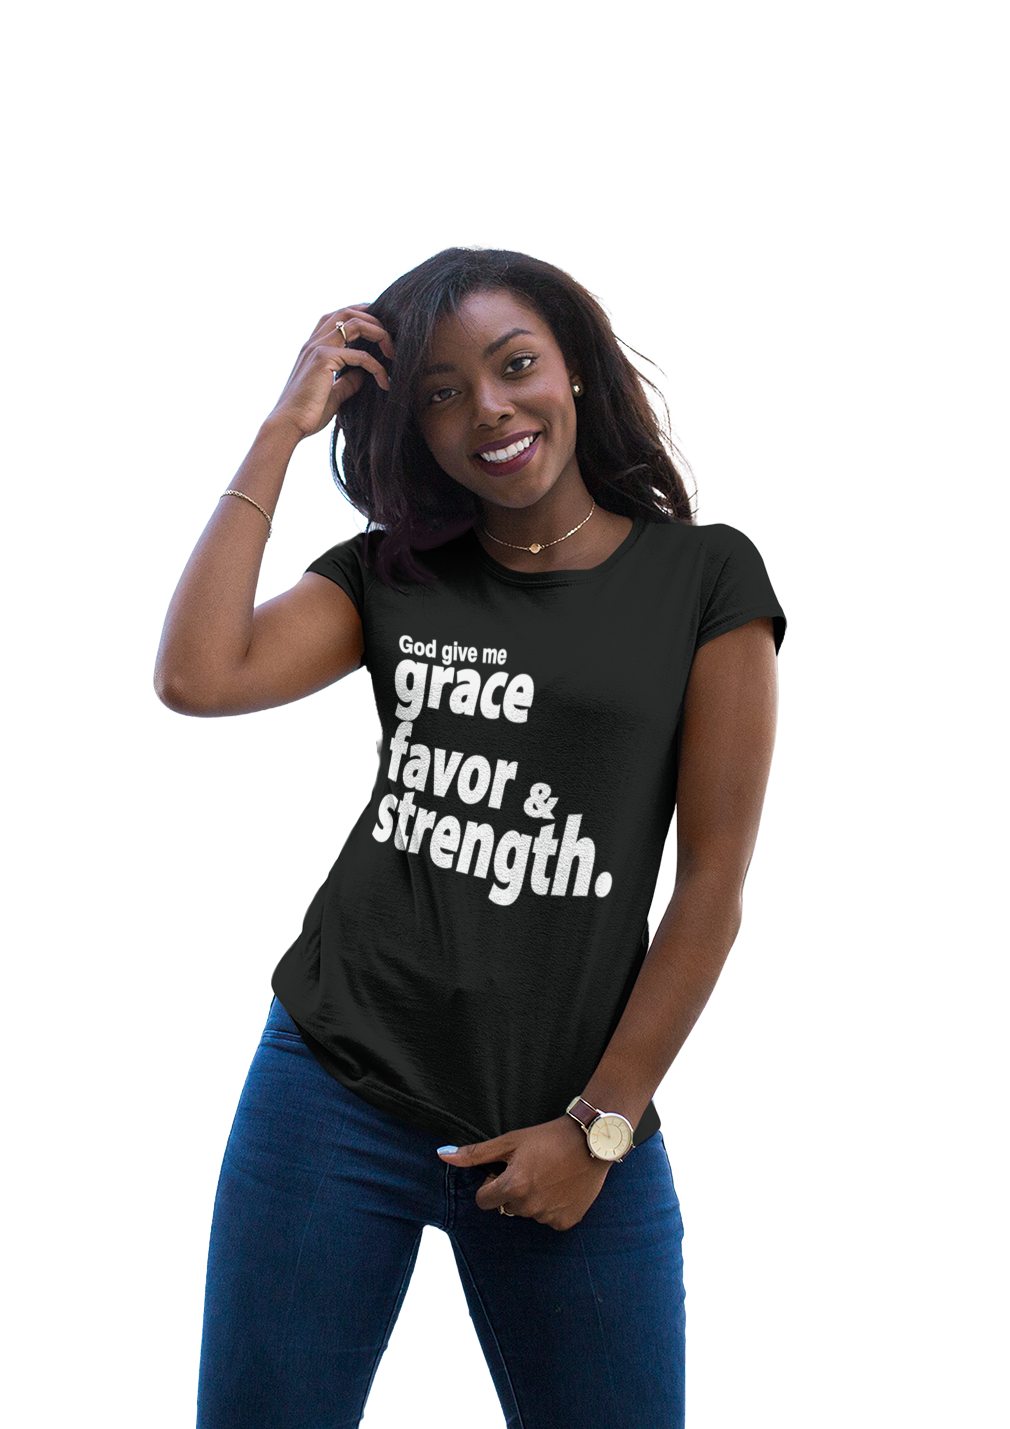 Grace Favor and Strength/ Black T-shirt